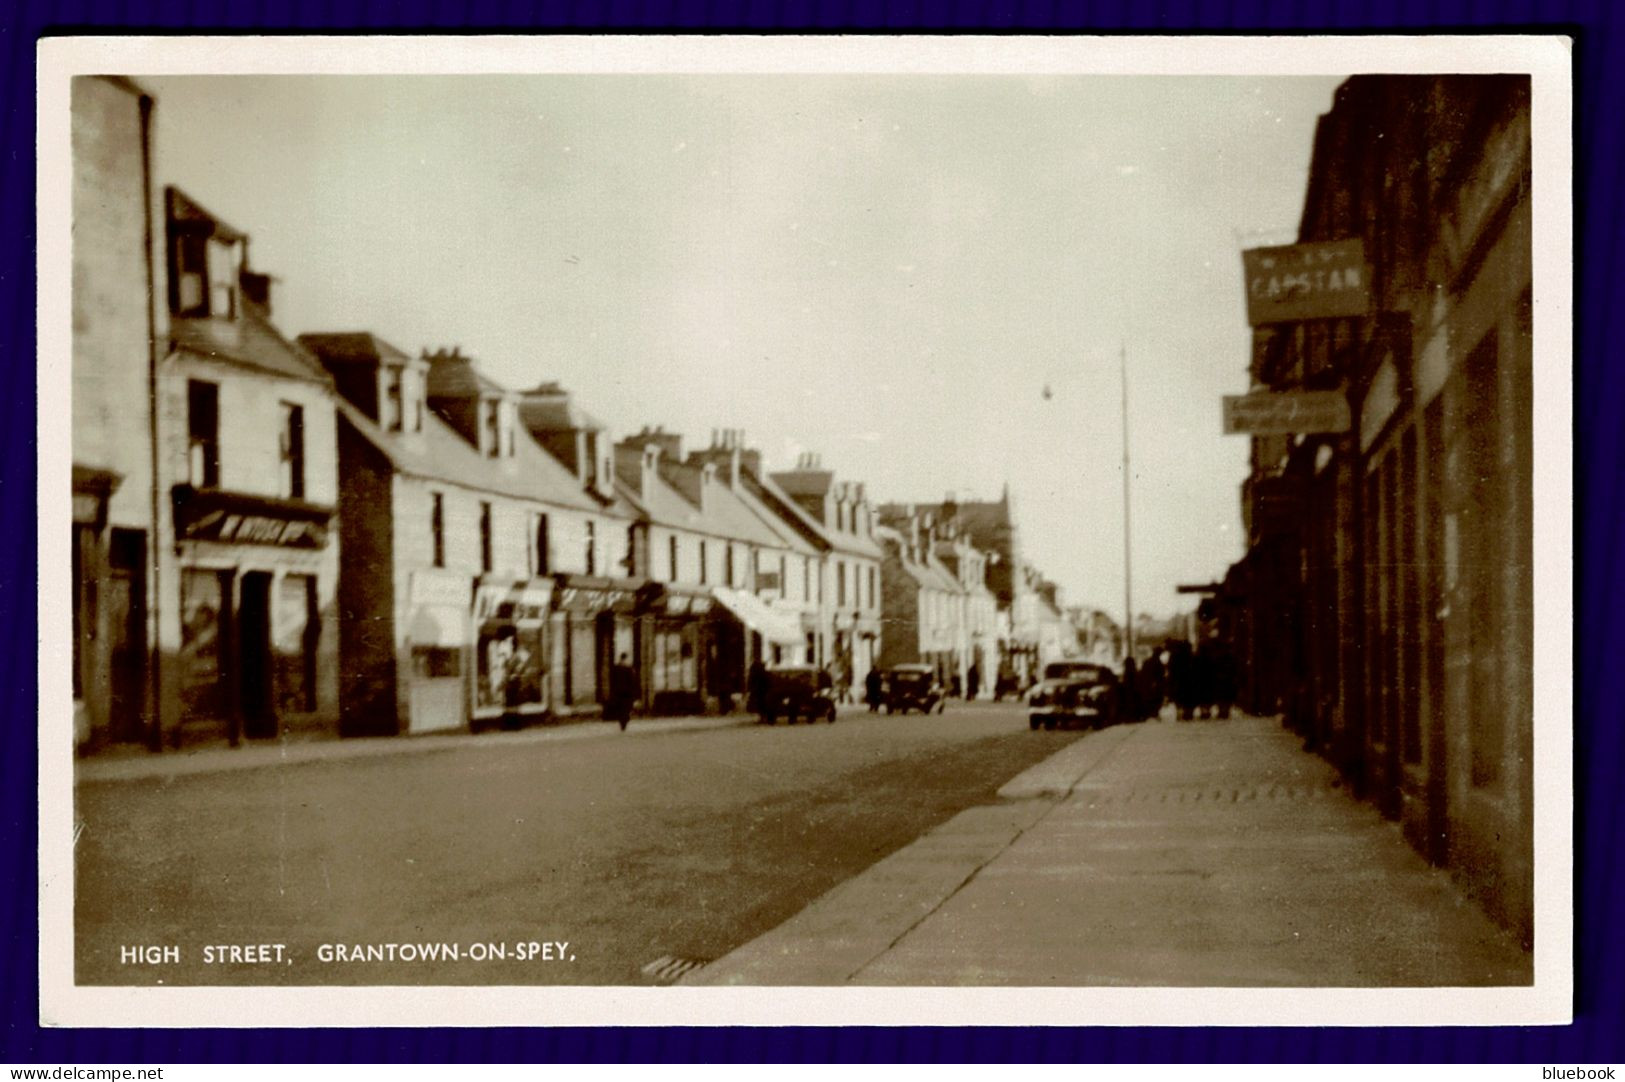 Ref 1633 - Photo Postcard - High Street Grantown-on-Spey - Moray Scotland - Moray